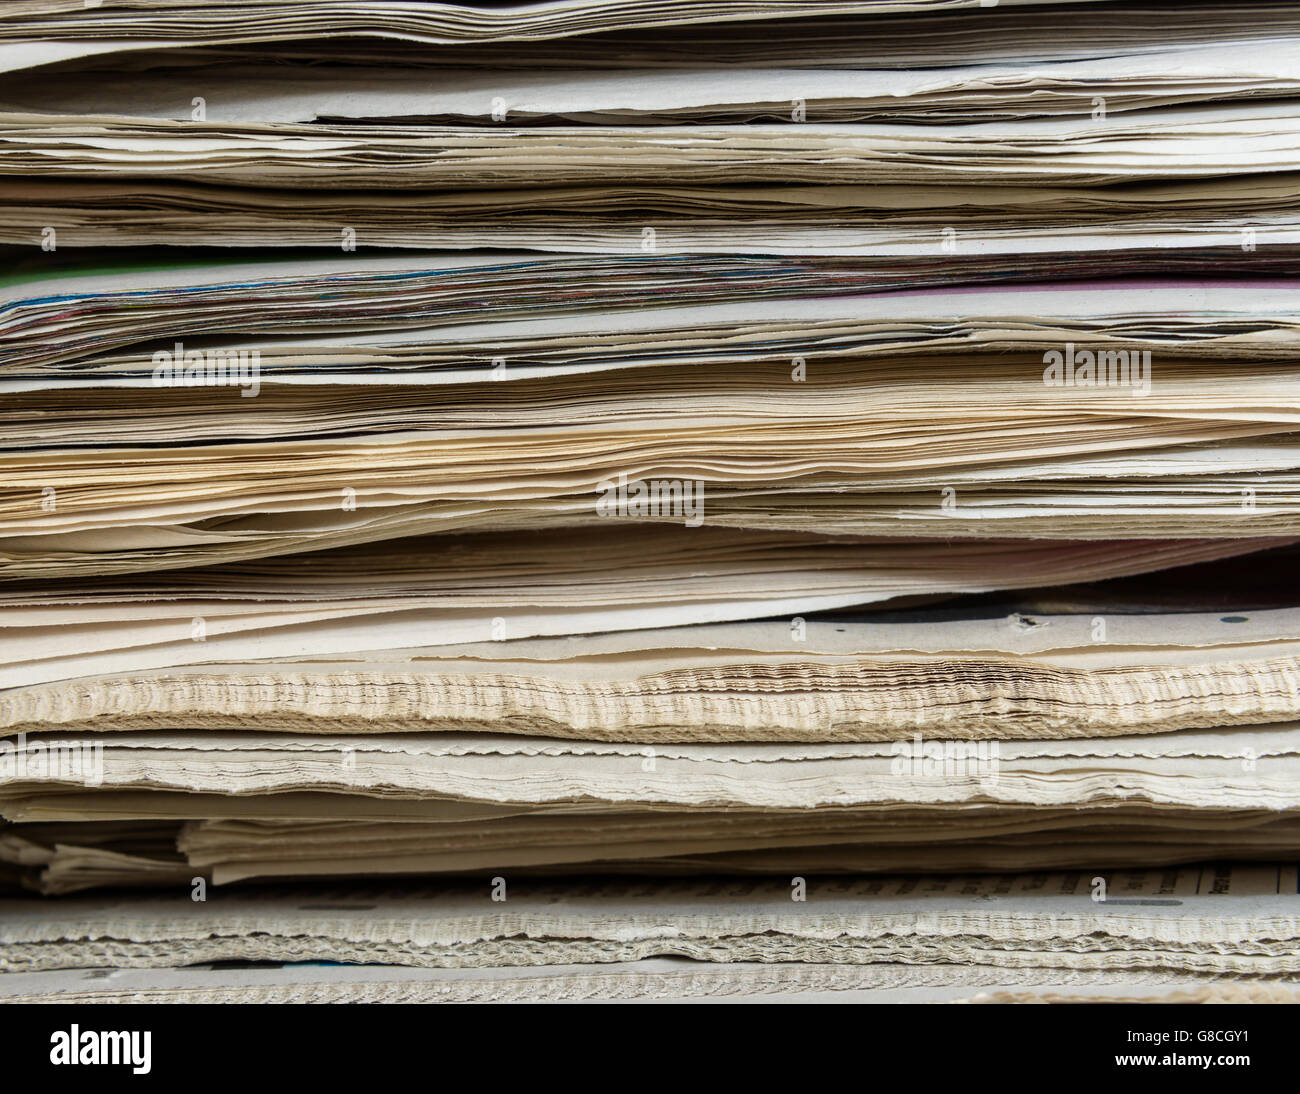 Pile of newspapers closeup Stock Photo